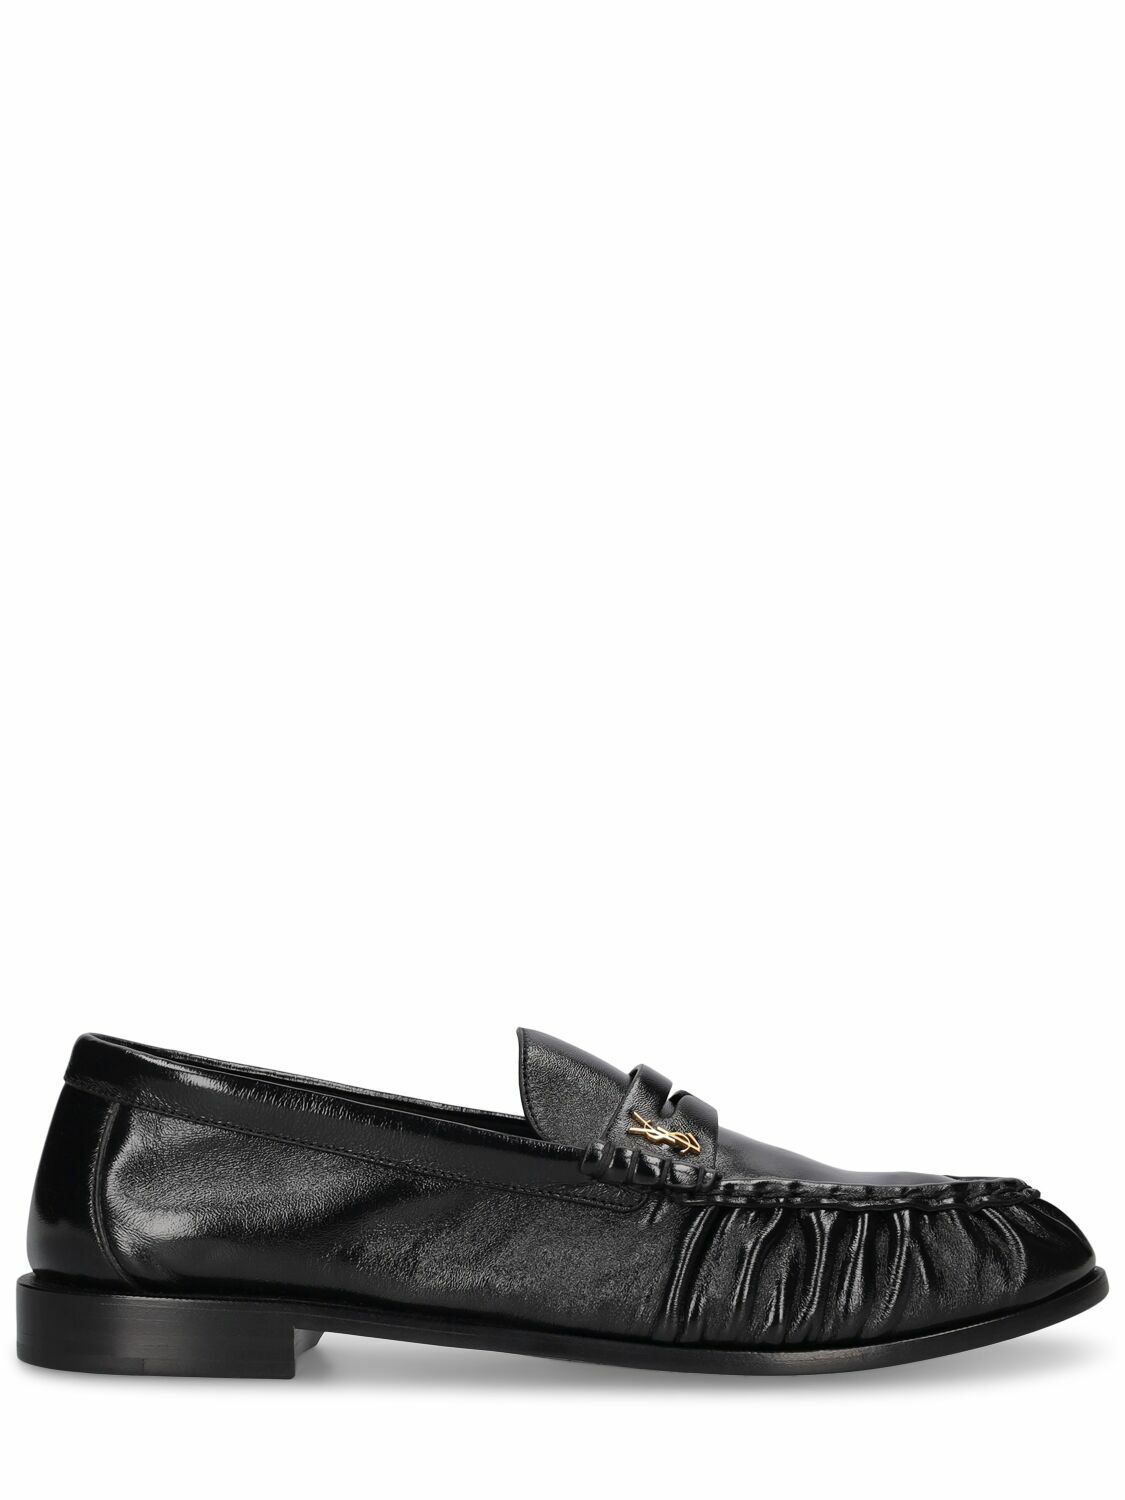 Photo: SAINT LAURENT - Le Loafer 15 Leather Moccasins